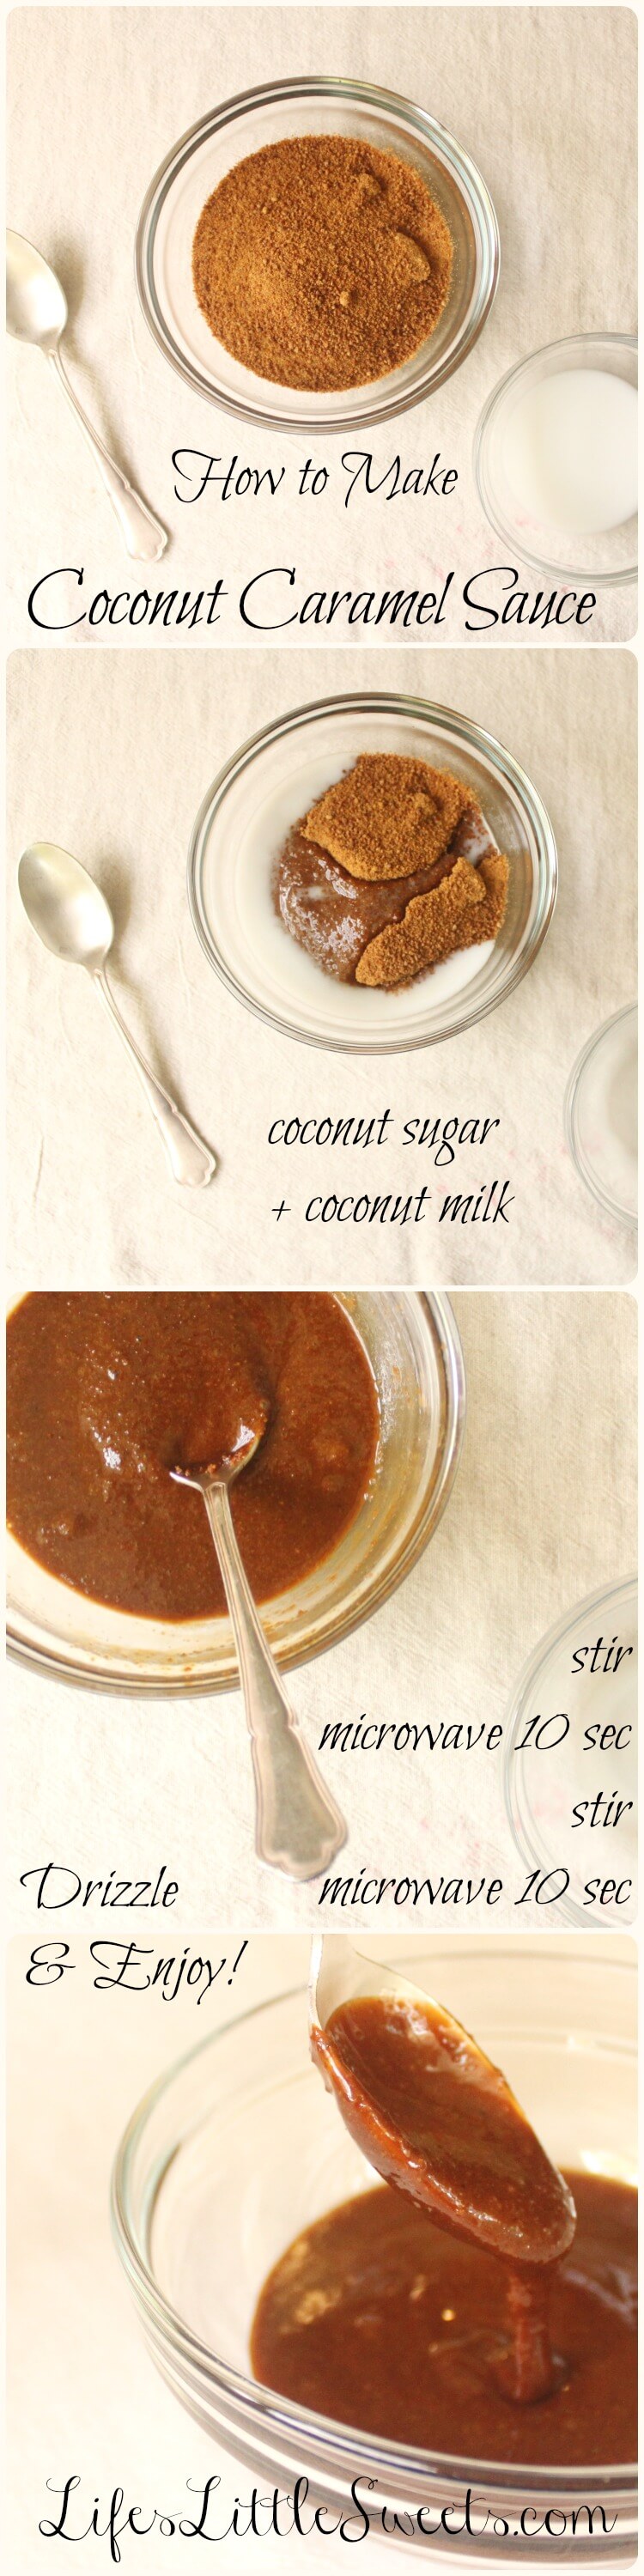 how to make coconut caramel sauce